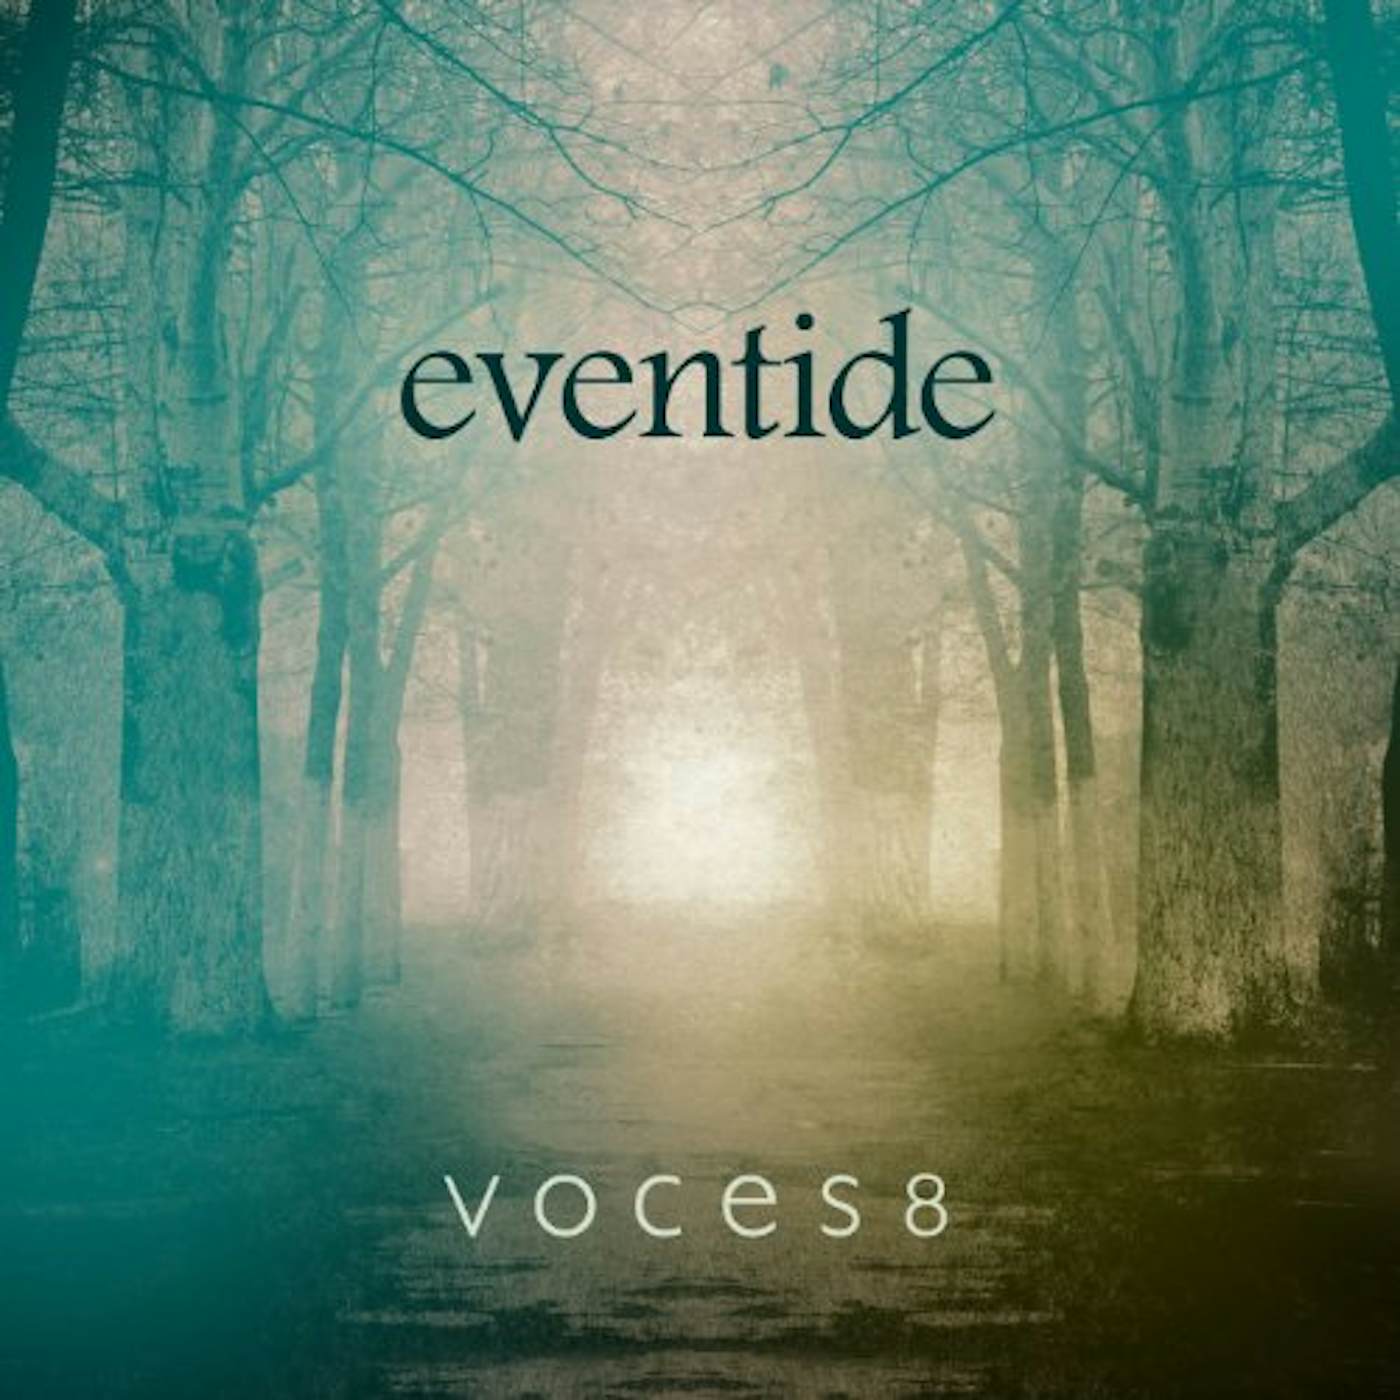 Voces8 EVENTIDE CD